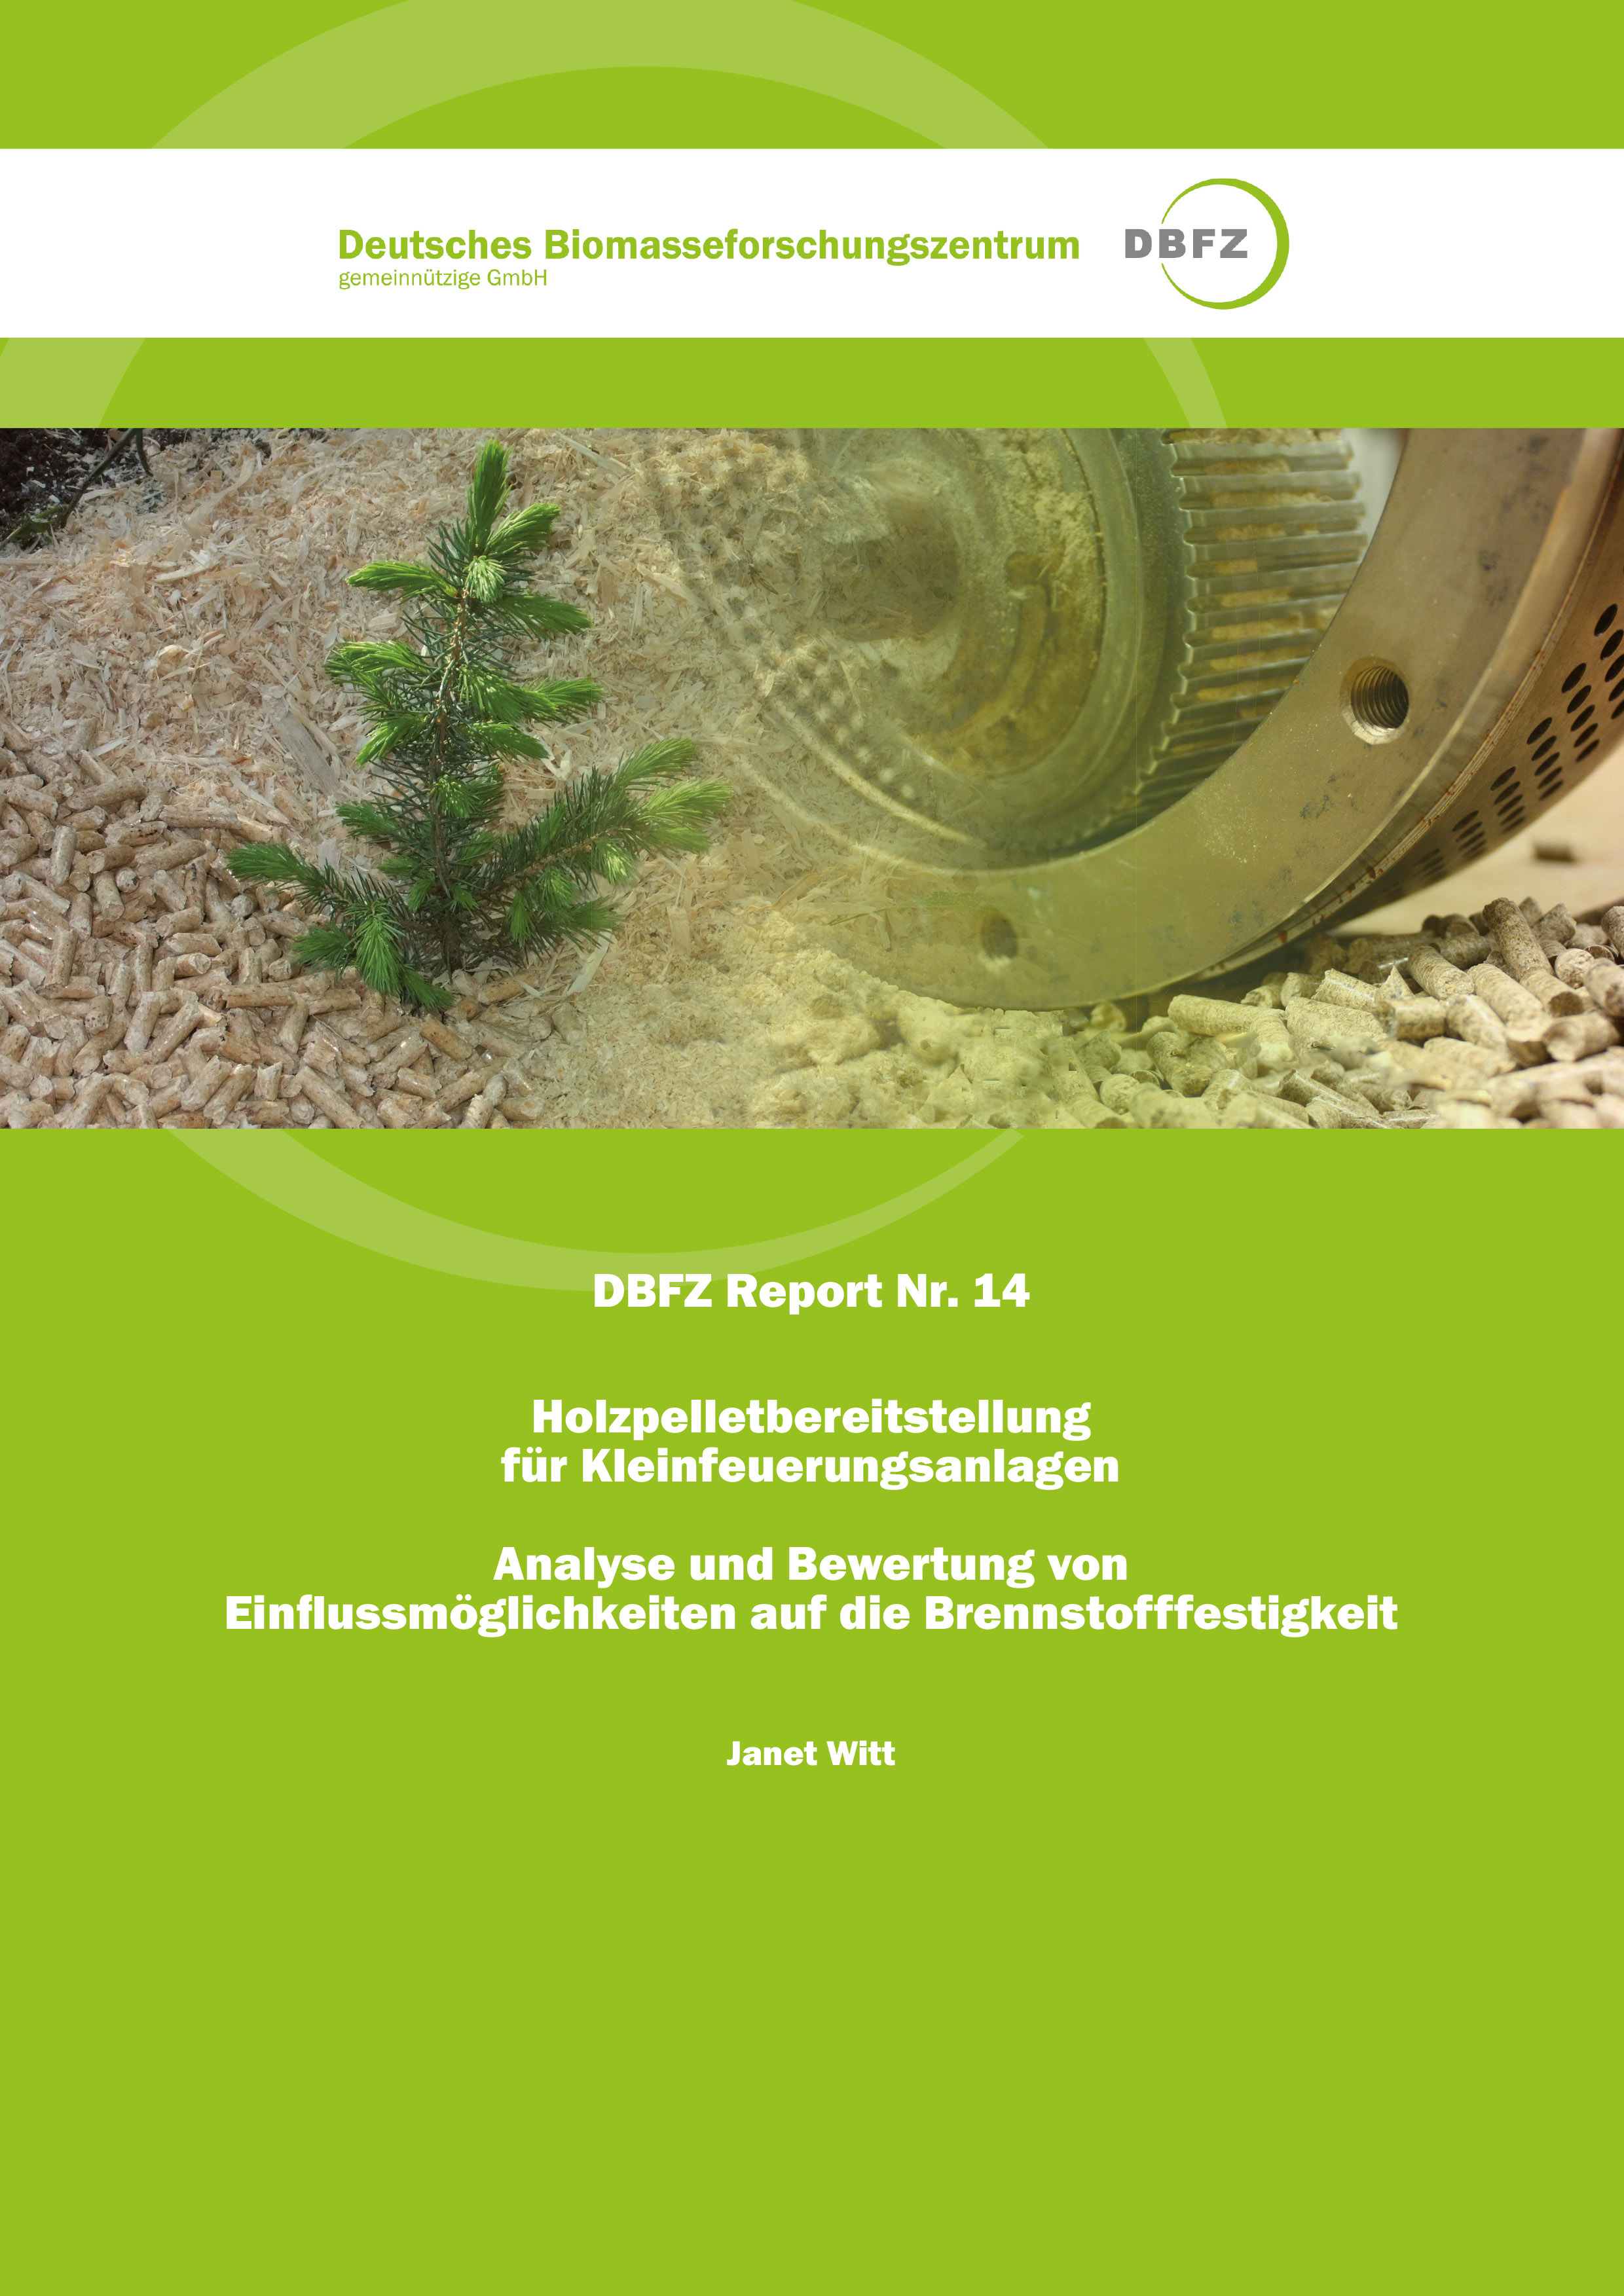 DBFZ Report No. 14